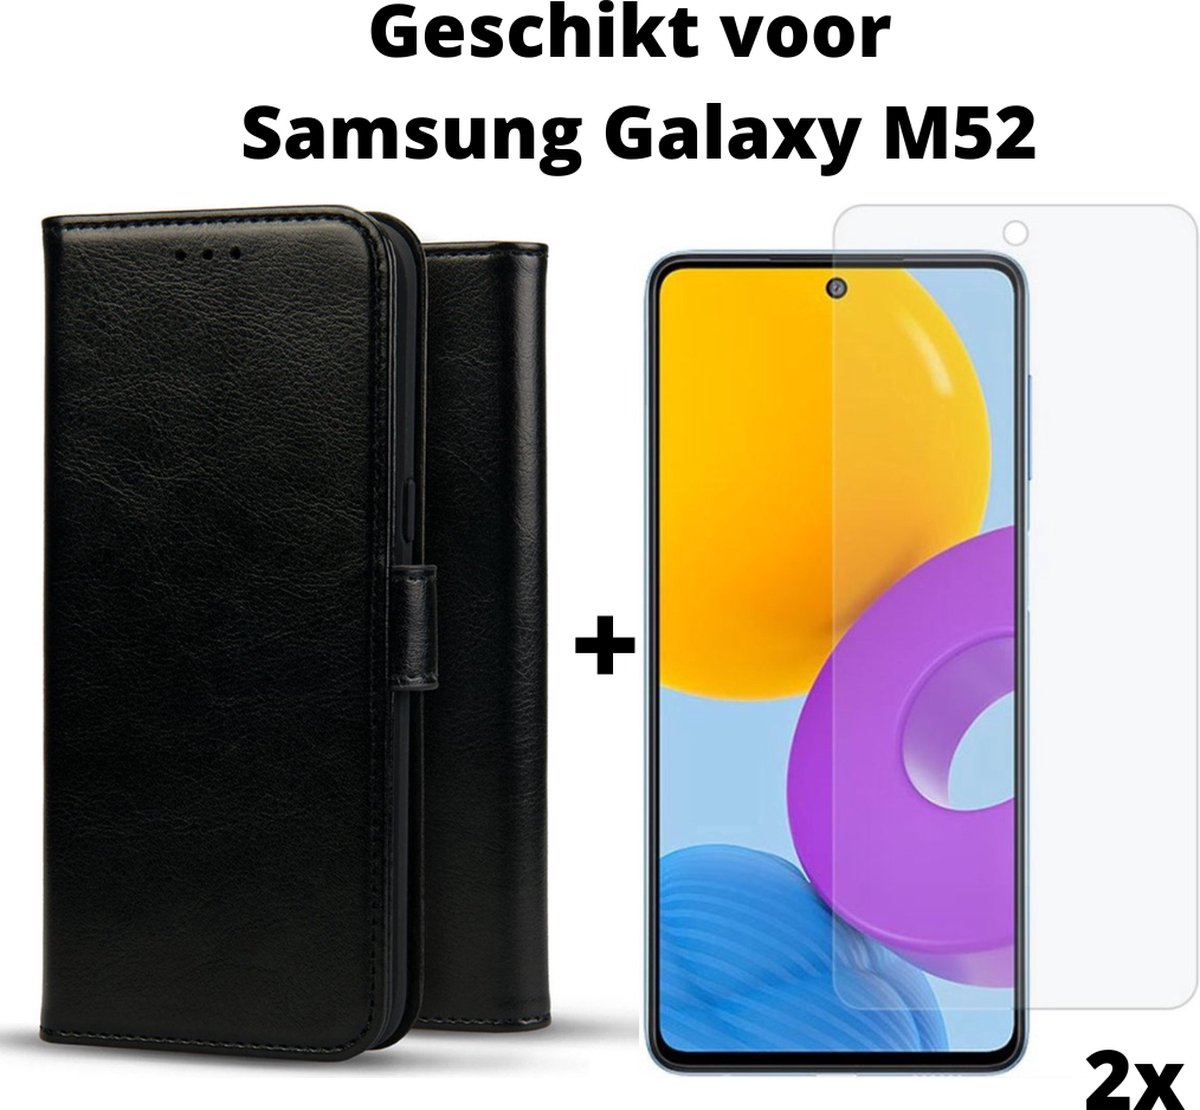 samsung galaxy M52 boek hoesje zwart achterkant + 2x Screen Protector - samsung m52 hoesje book case back cover zwart + 2x Tempert Glas